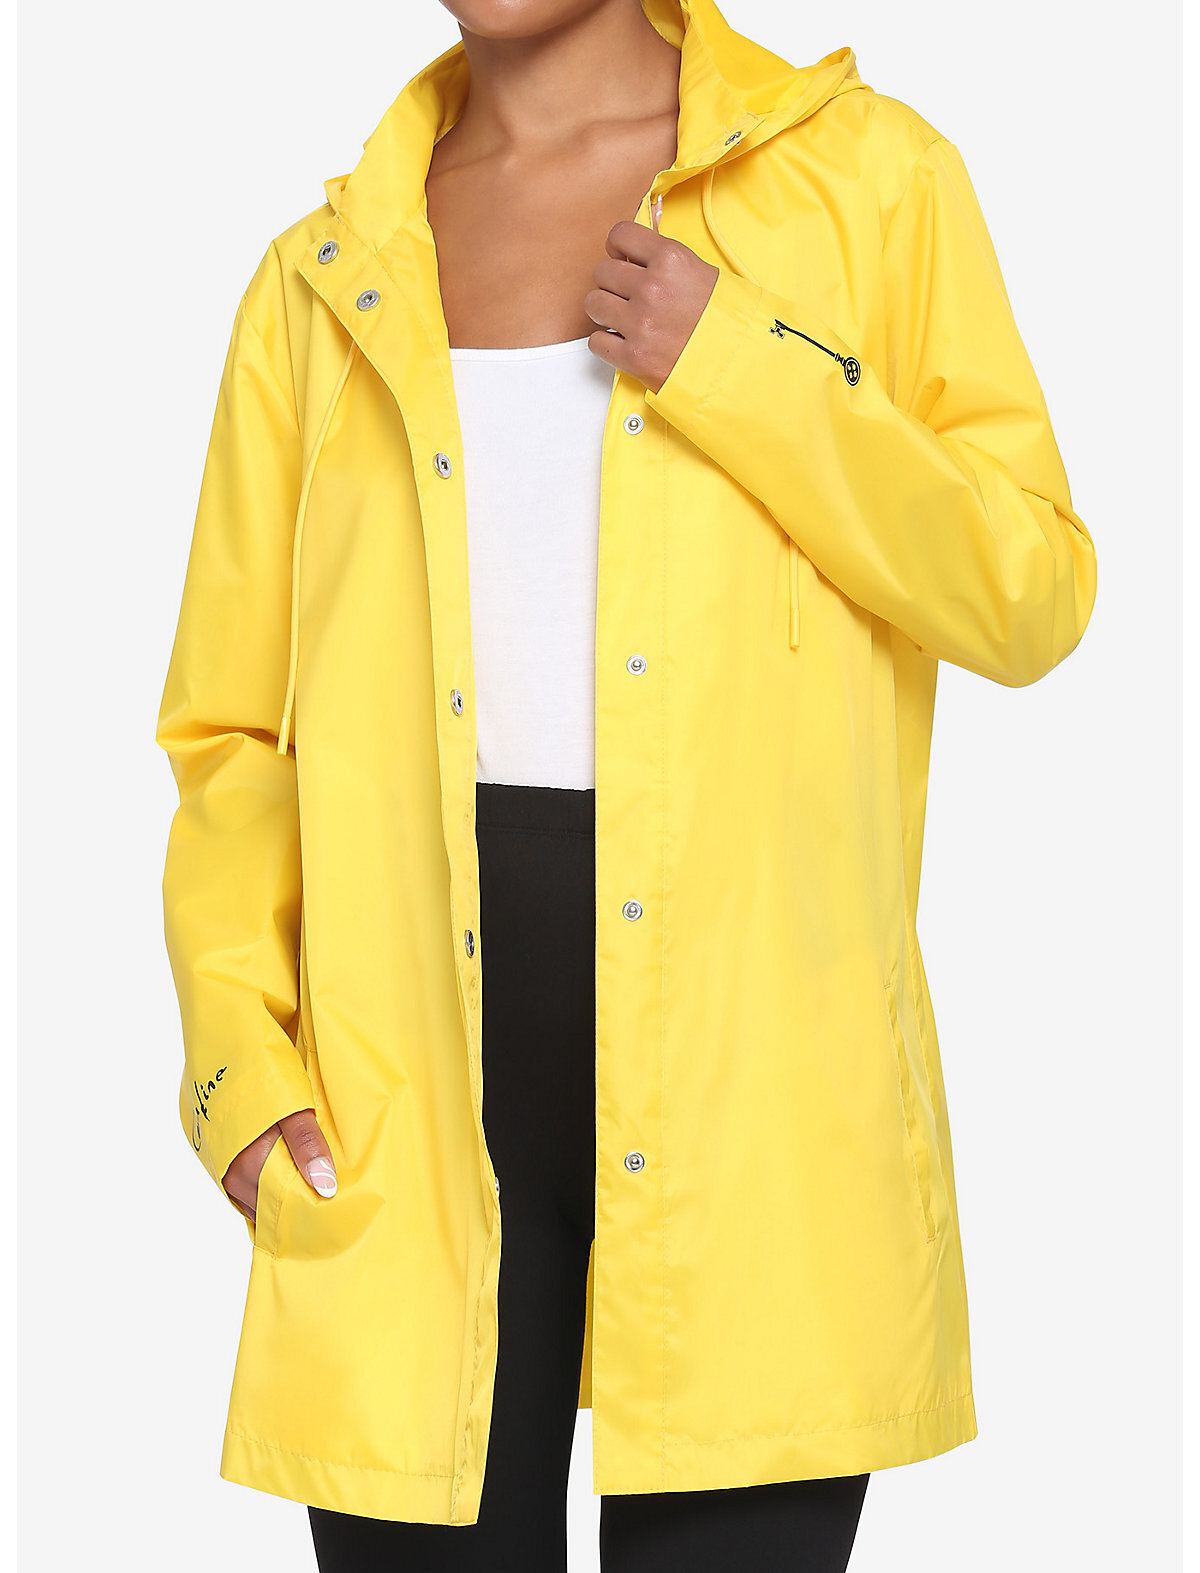 Coraline Yellow Raincoat